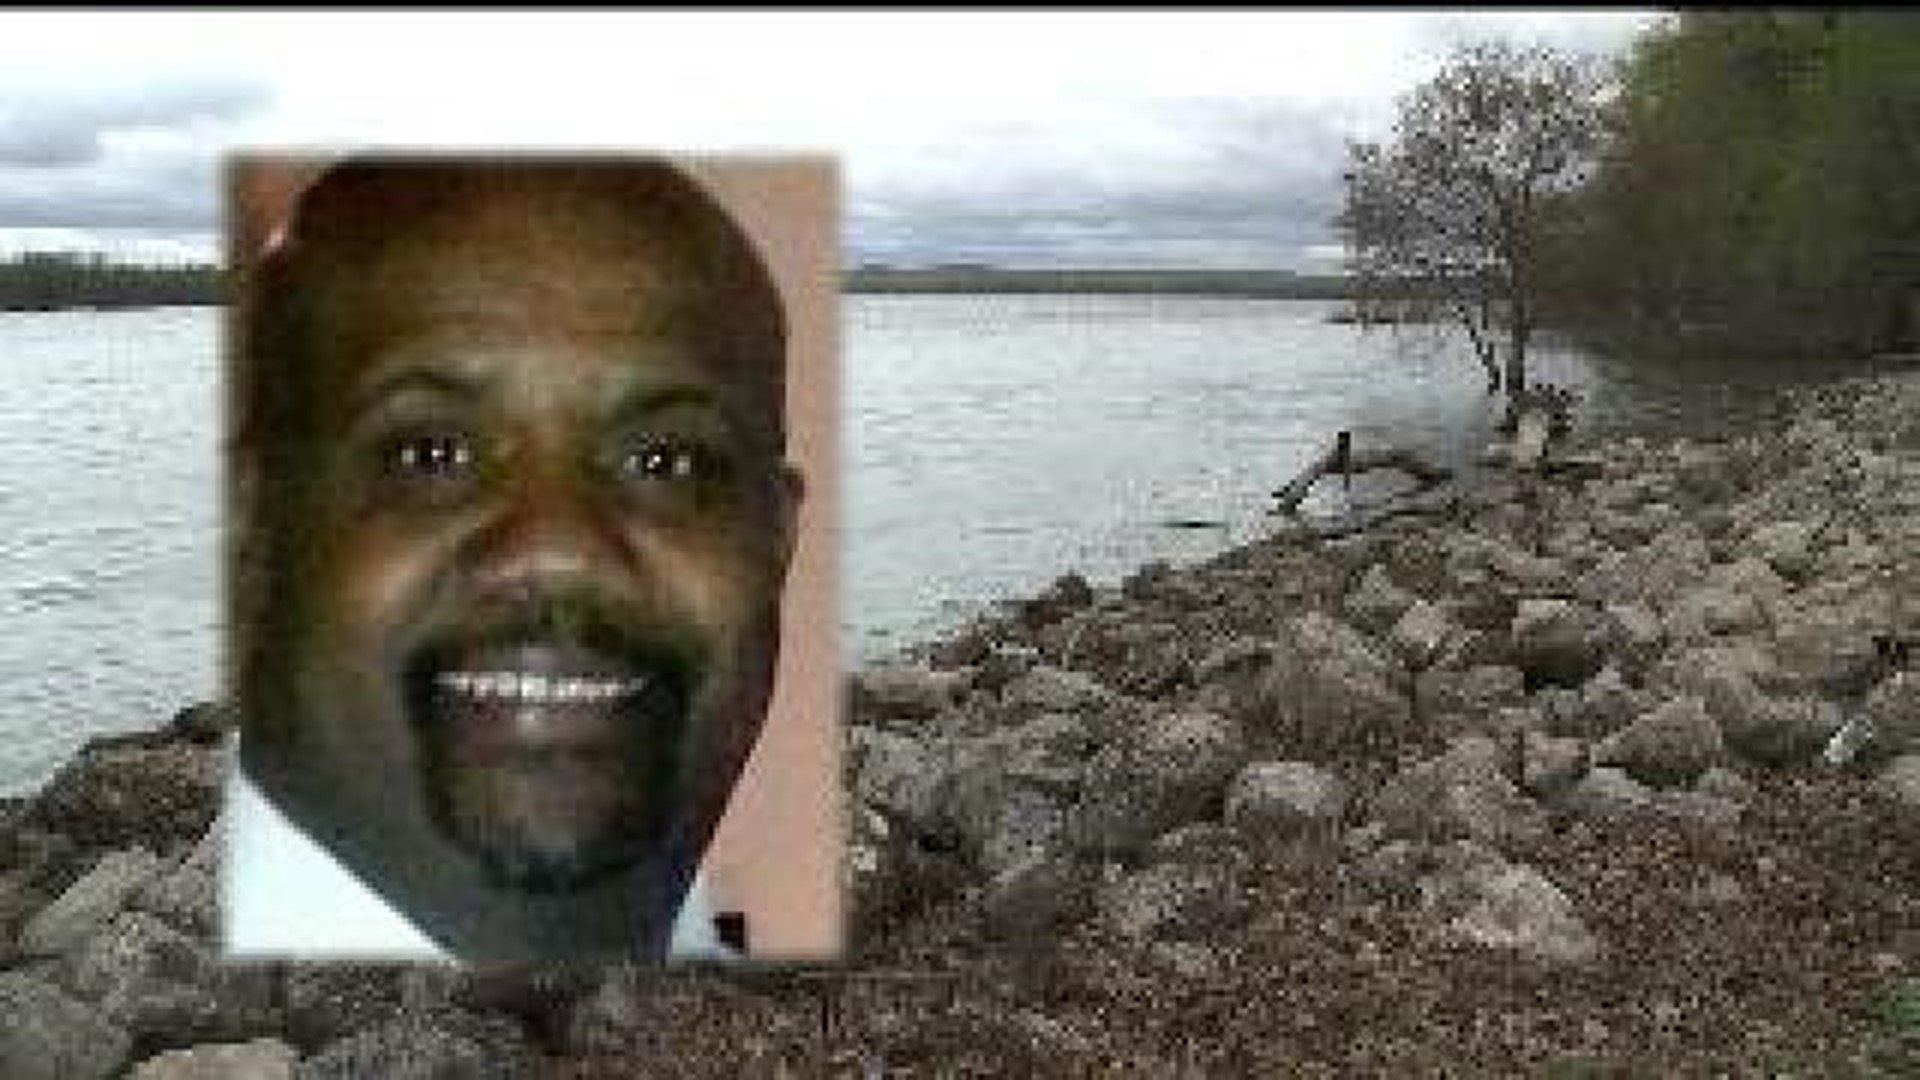 Body of missing Davenport man found